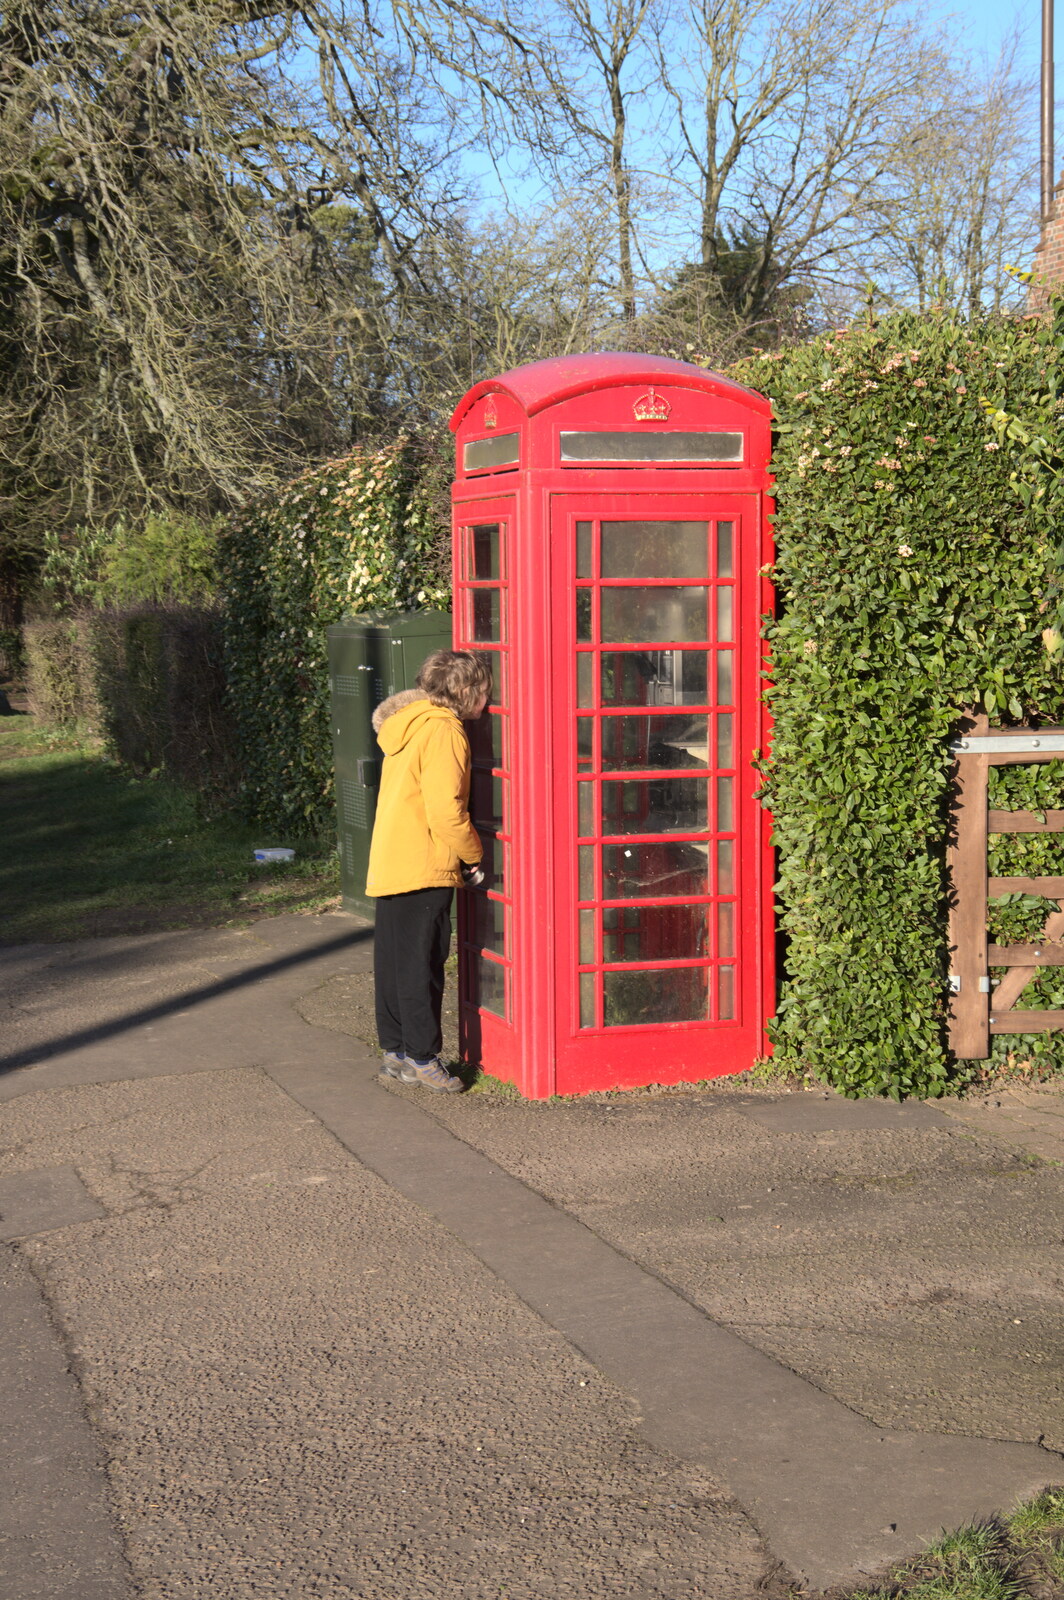 Fred looks at a K6 phone box from Snowdrops at Talconeston Hall, Tacolneston, Norfolk - 7th February 2020